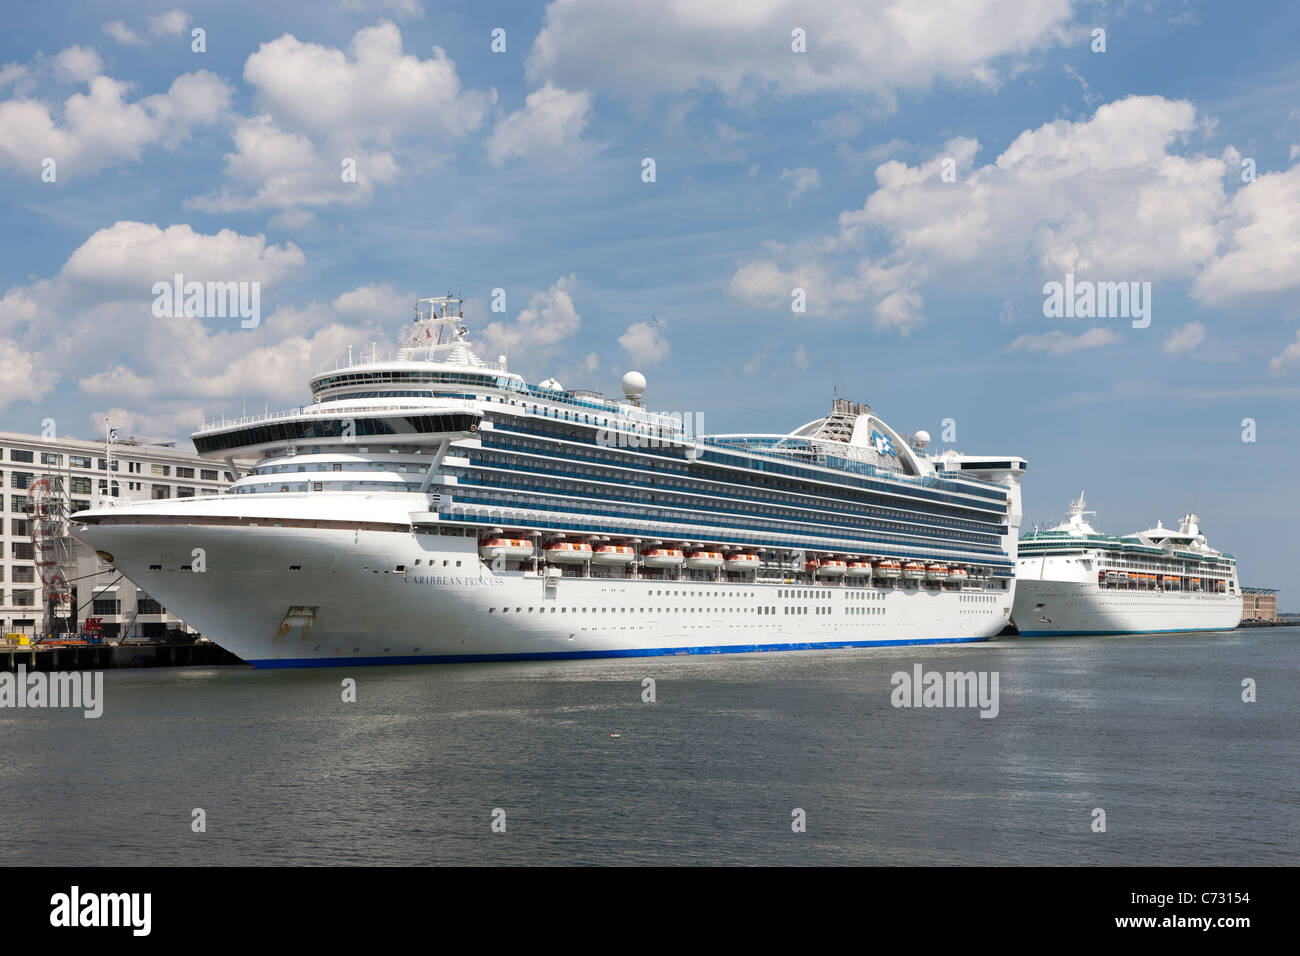 Cruise ships docked at the Black Falcon Cruise Port, Boston, Massachusetts Stock Photo